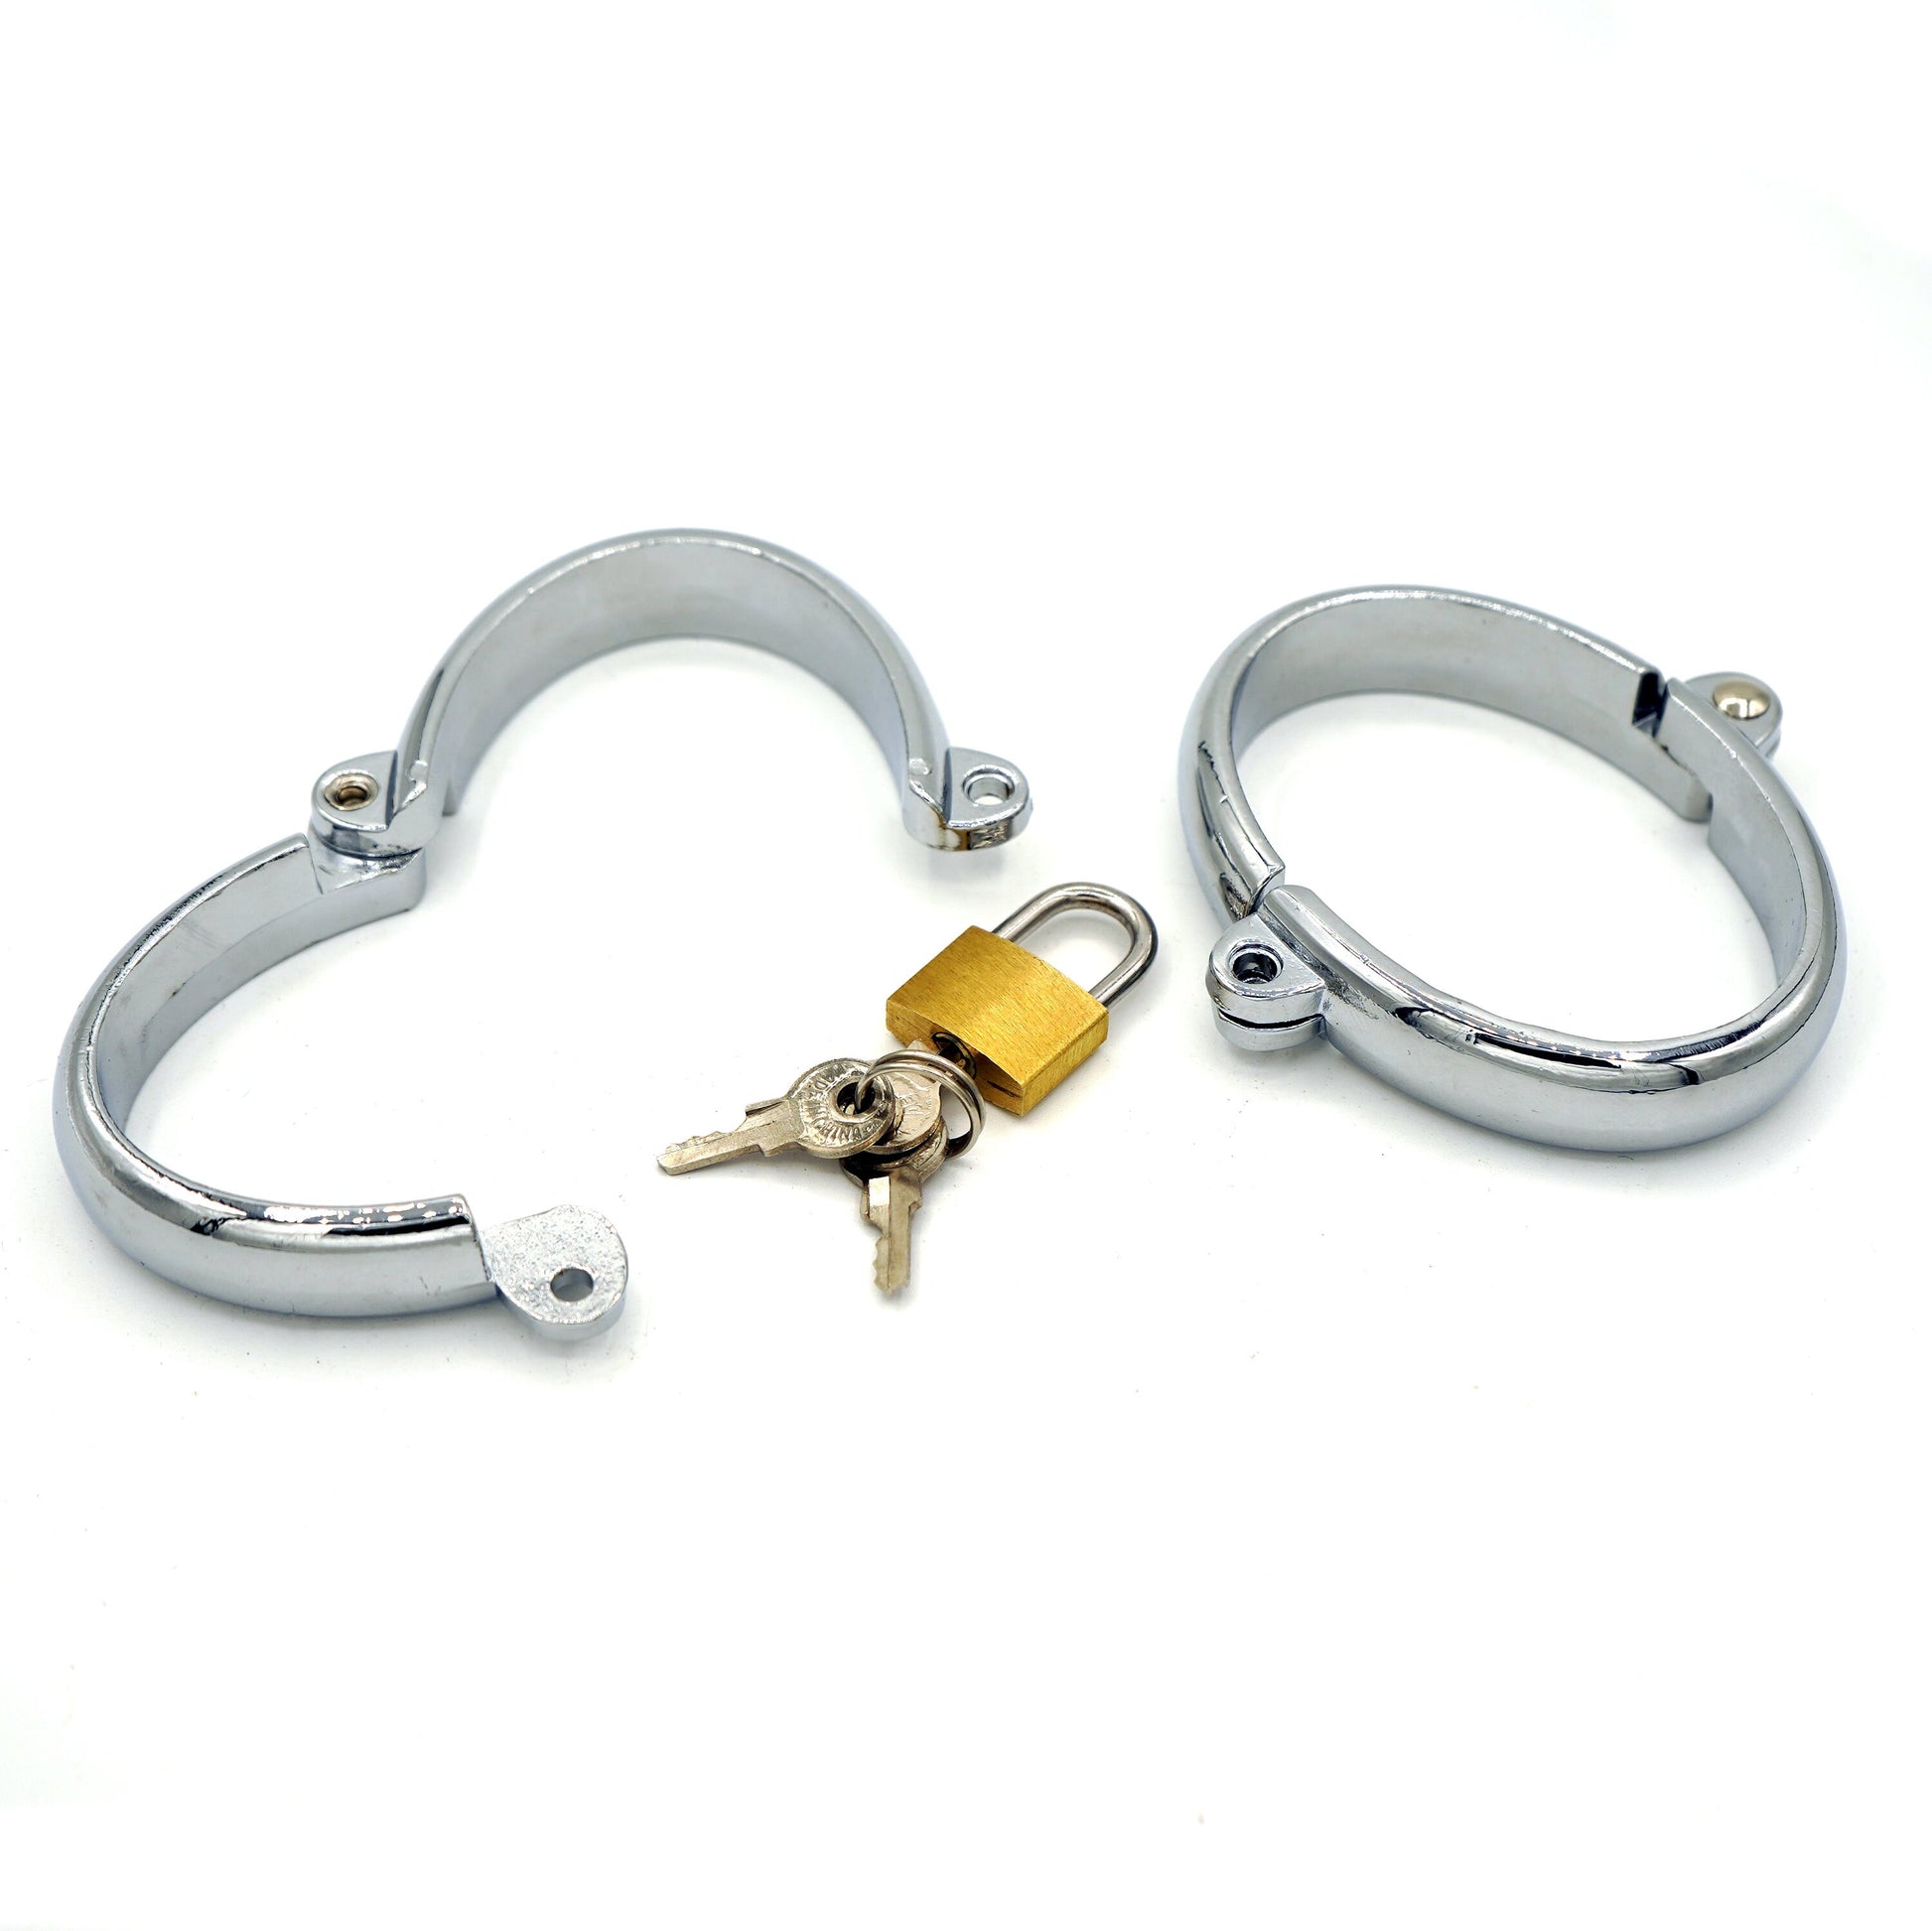 Charming handcuffs, bracelets with padlocks